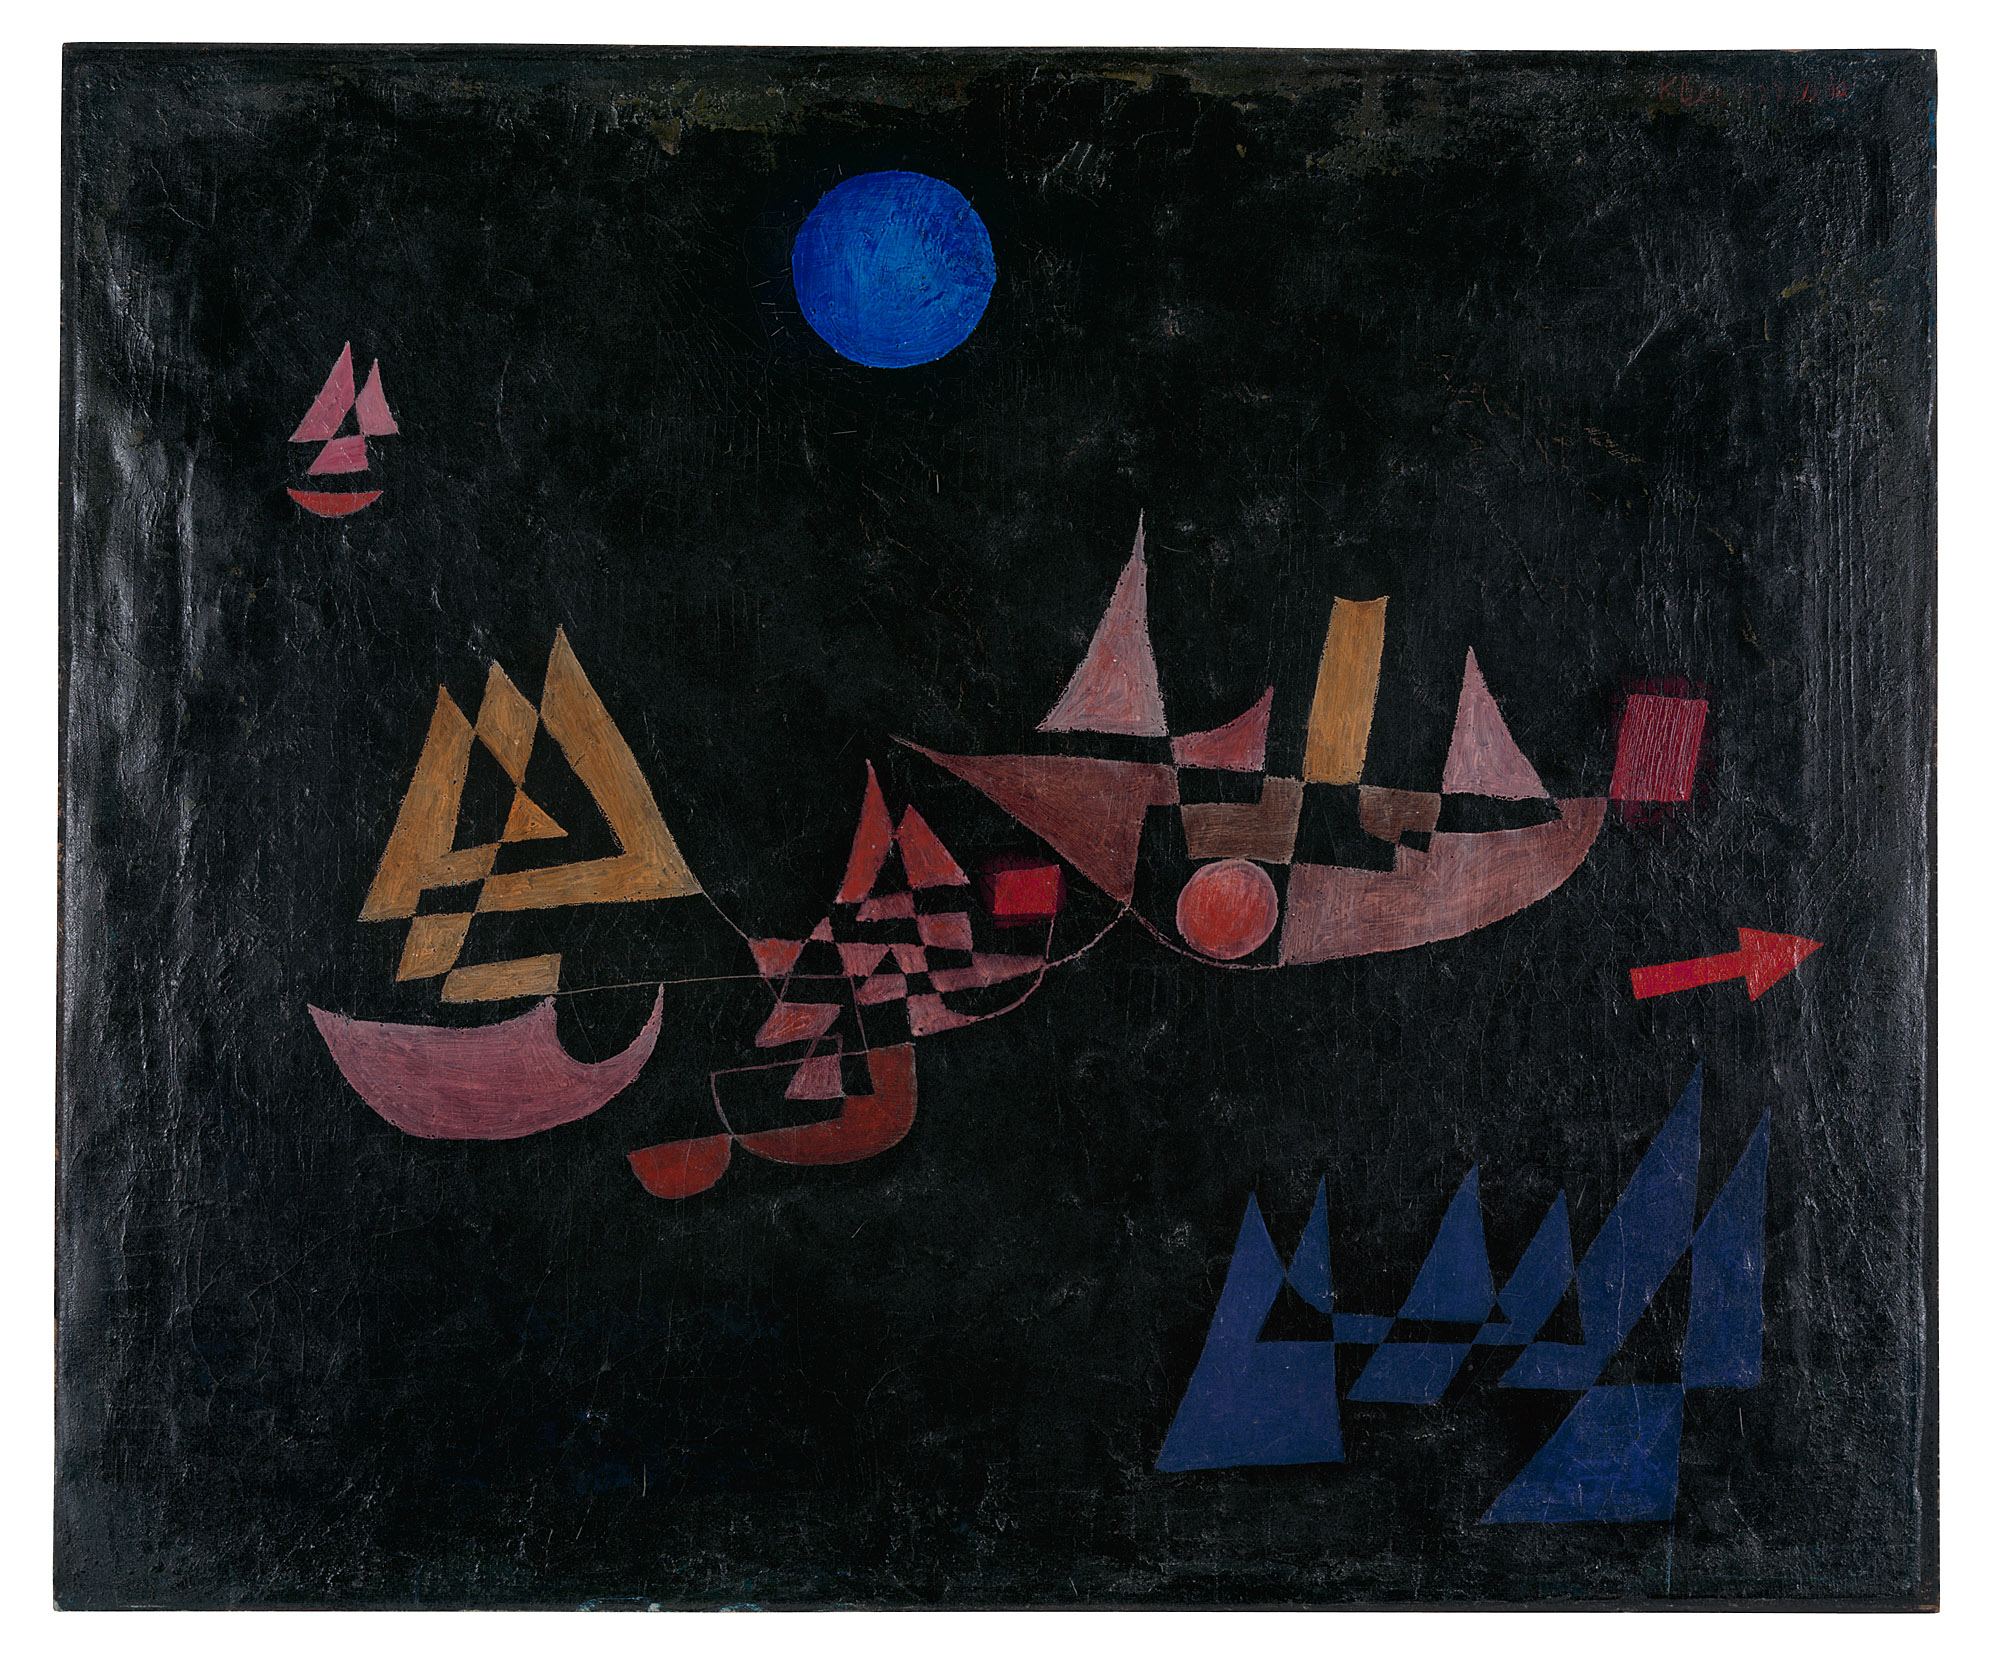 Departure of the Ships by Paul Klee - 1927 - 50 x 60 cm  Zentrum Paul Klee